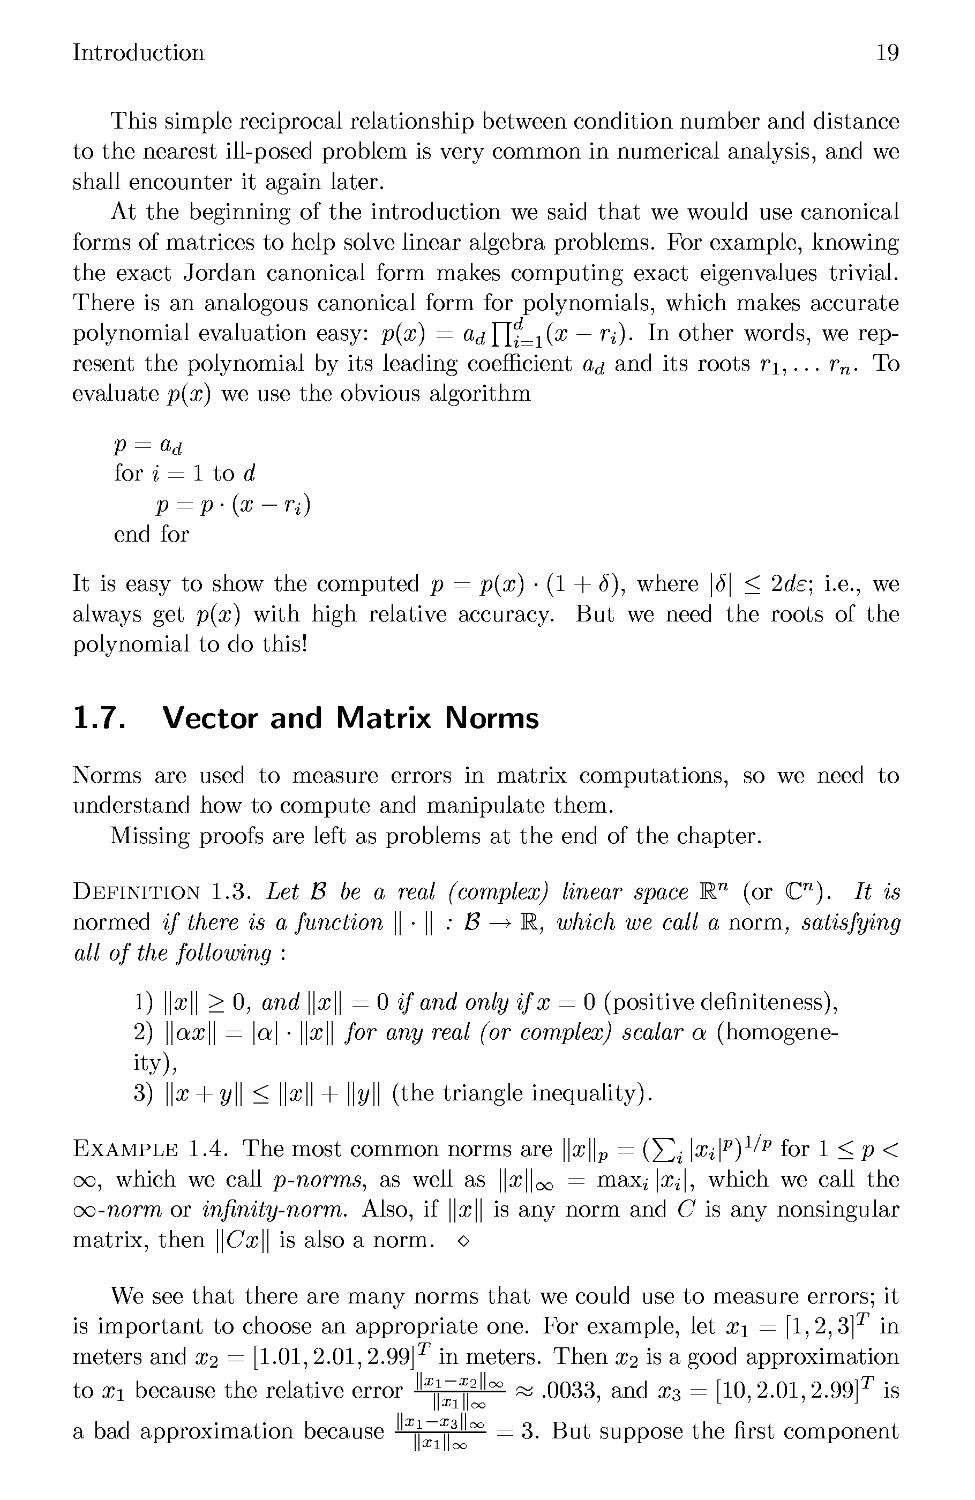 1.7 Vector and Matrix Norms